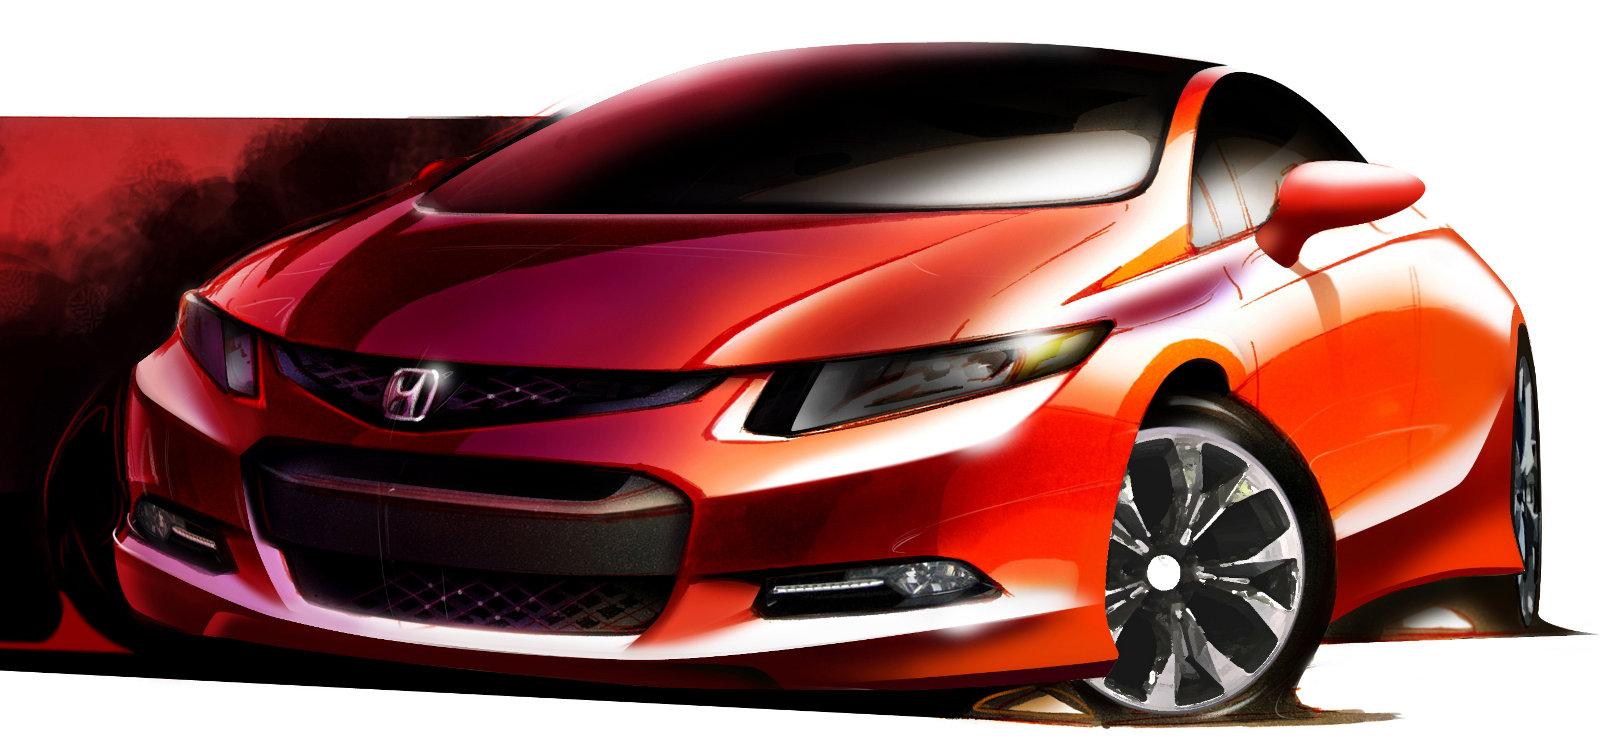  - Honda Civic Concept 2011